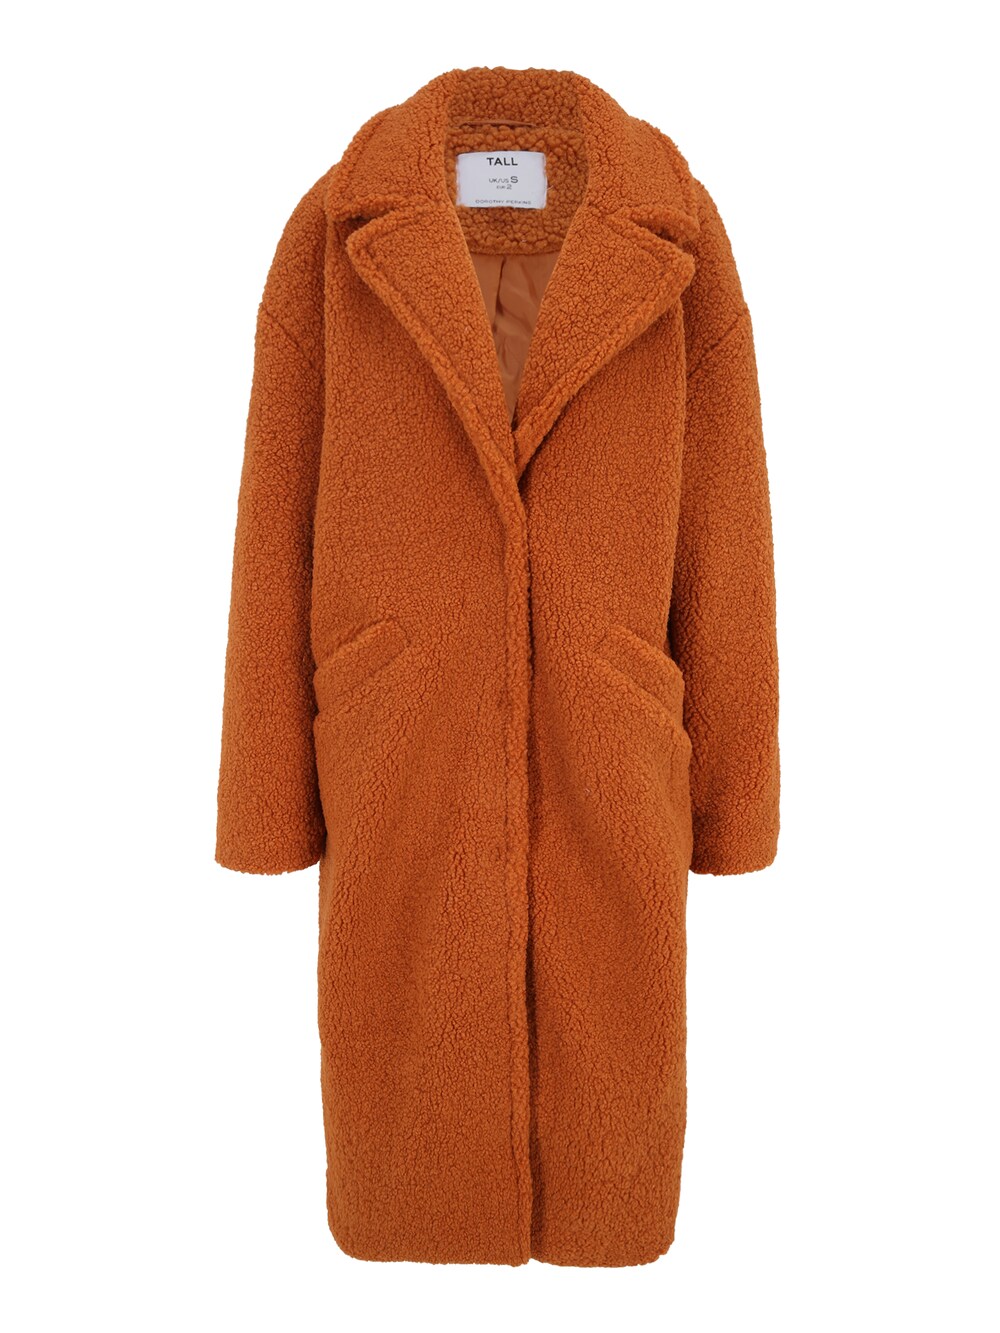 Межсезонное пальто Dorothy Perkins Tall, кэмел цена и фото